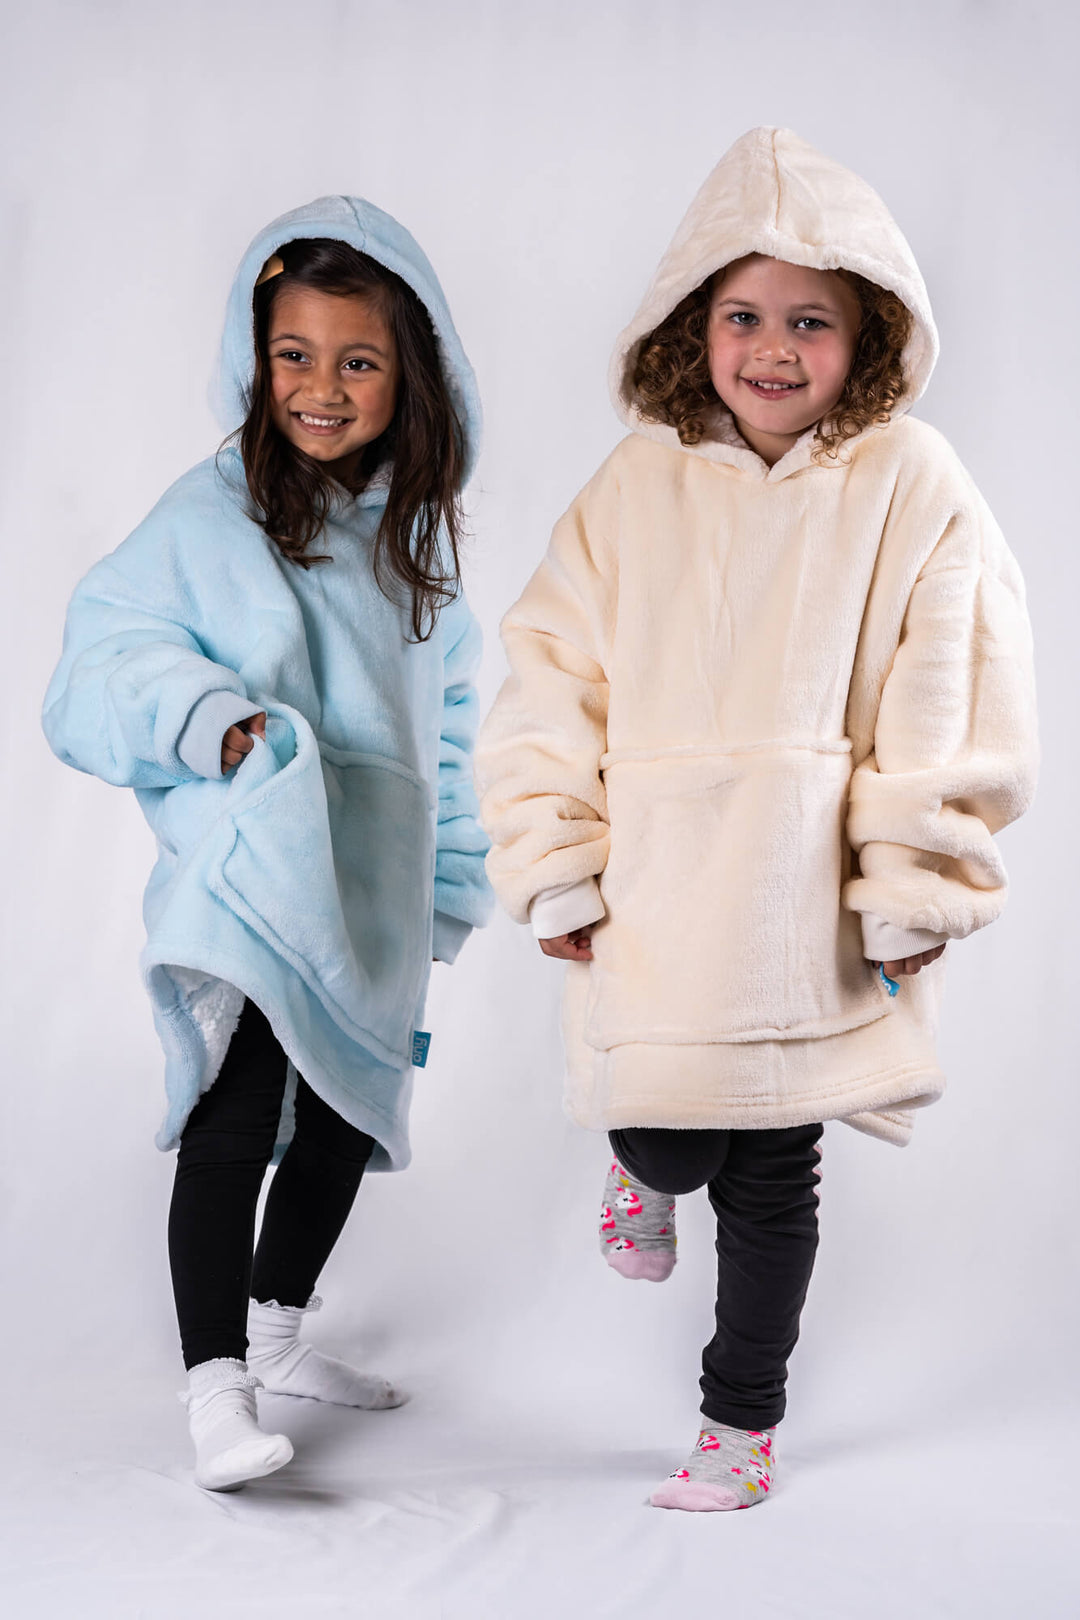 Kids & Little Ones Cream Extra Thick Ony Hoodie Blanket - It's Ony